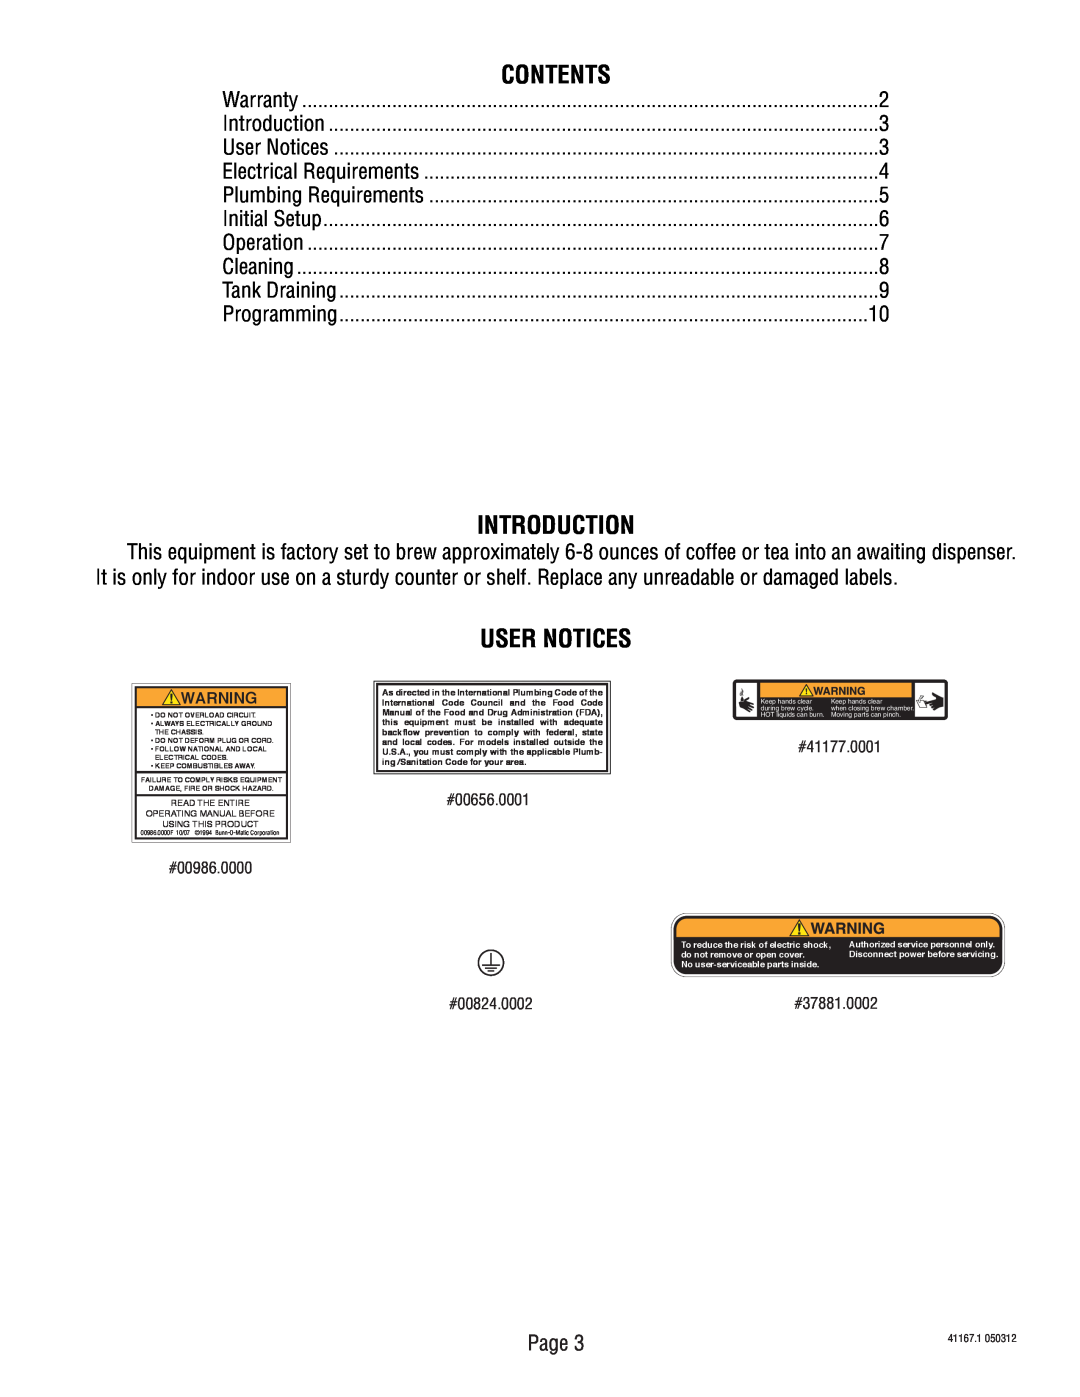 Bunn 41167.0001B service manual Introduction, User Notices 